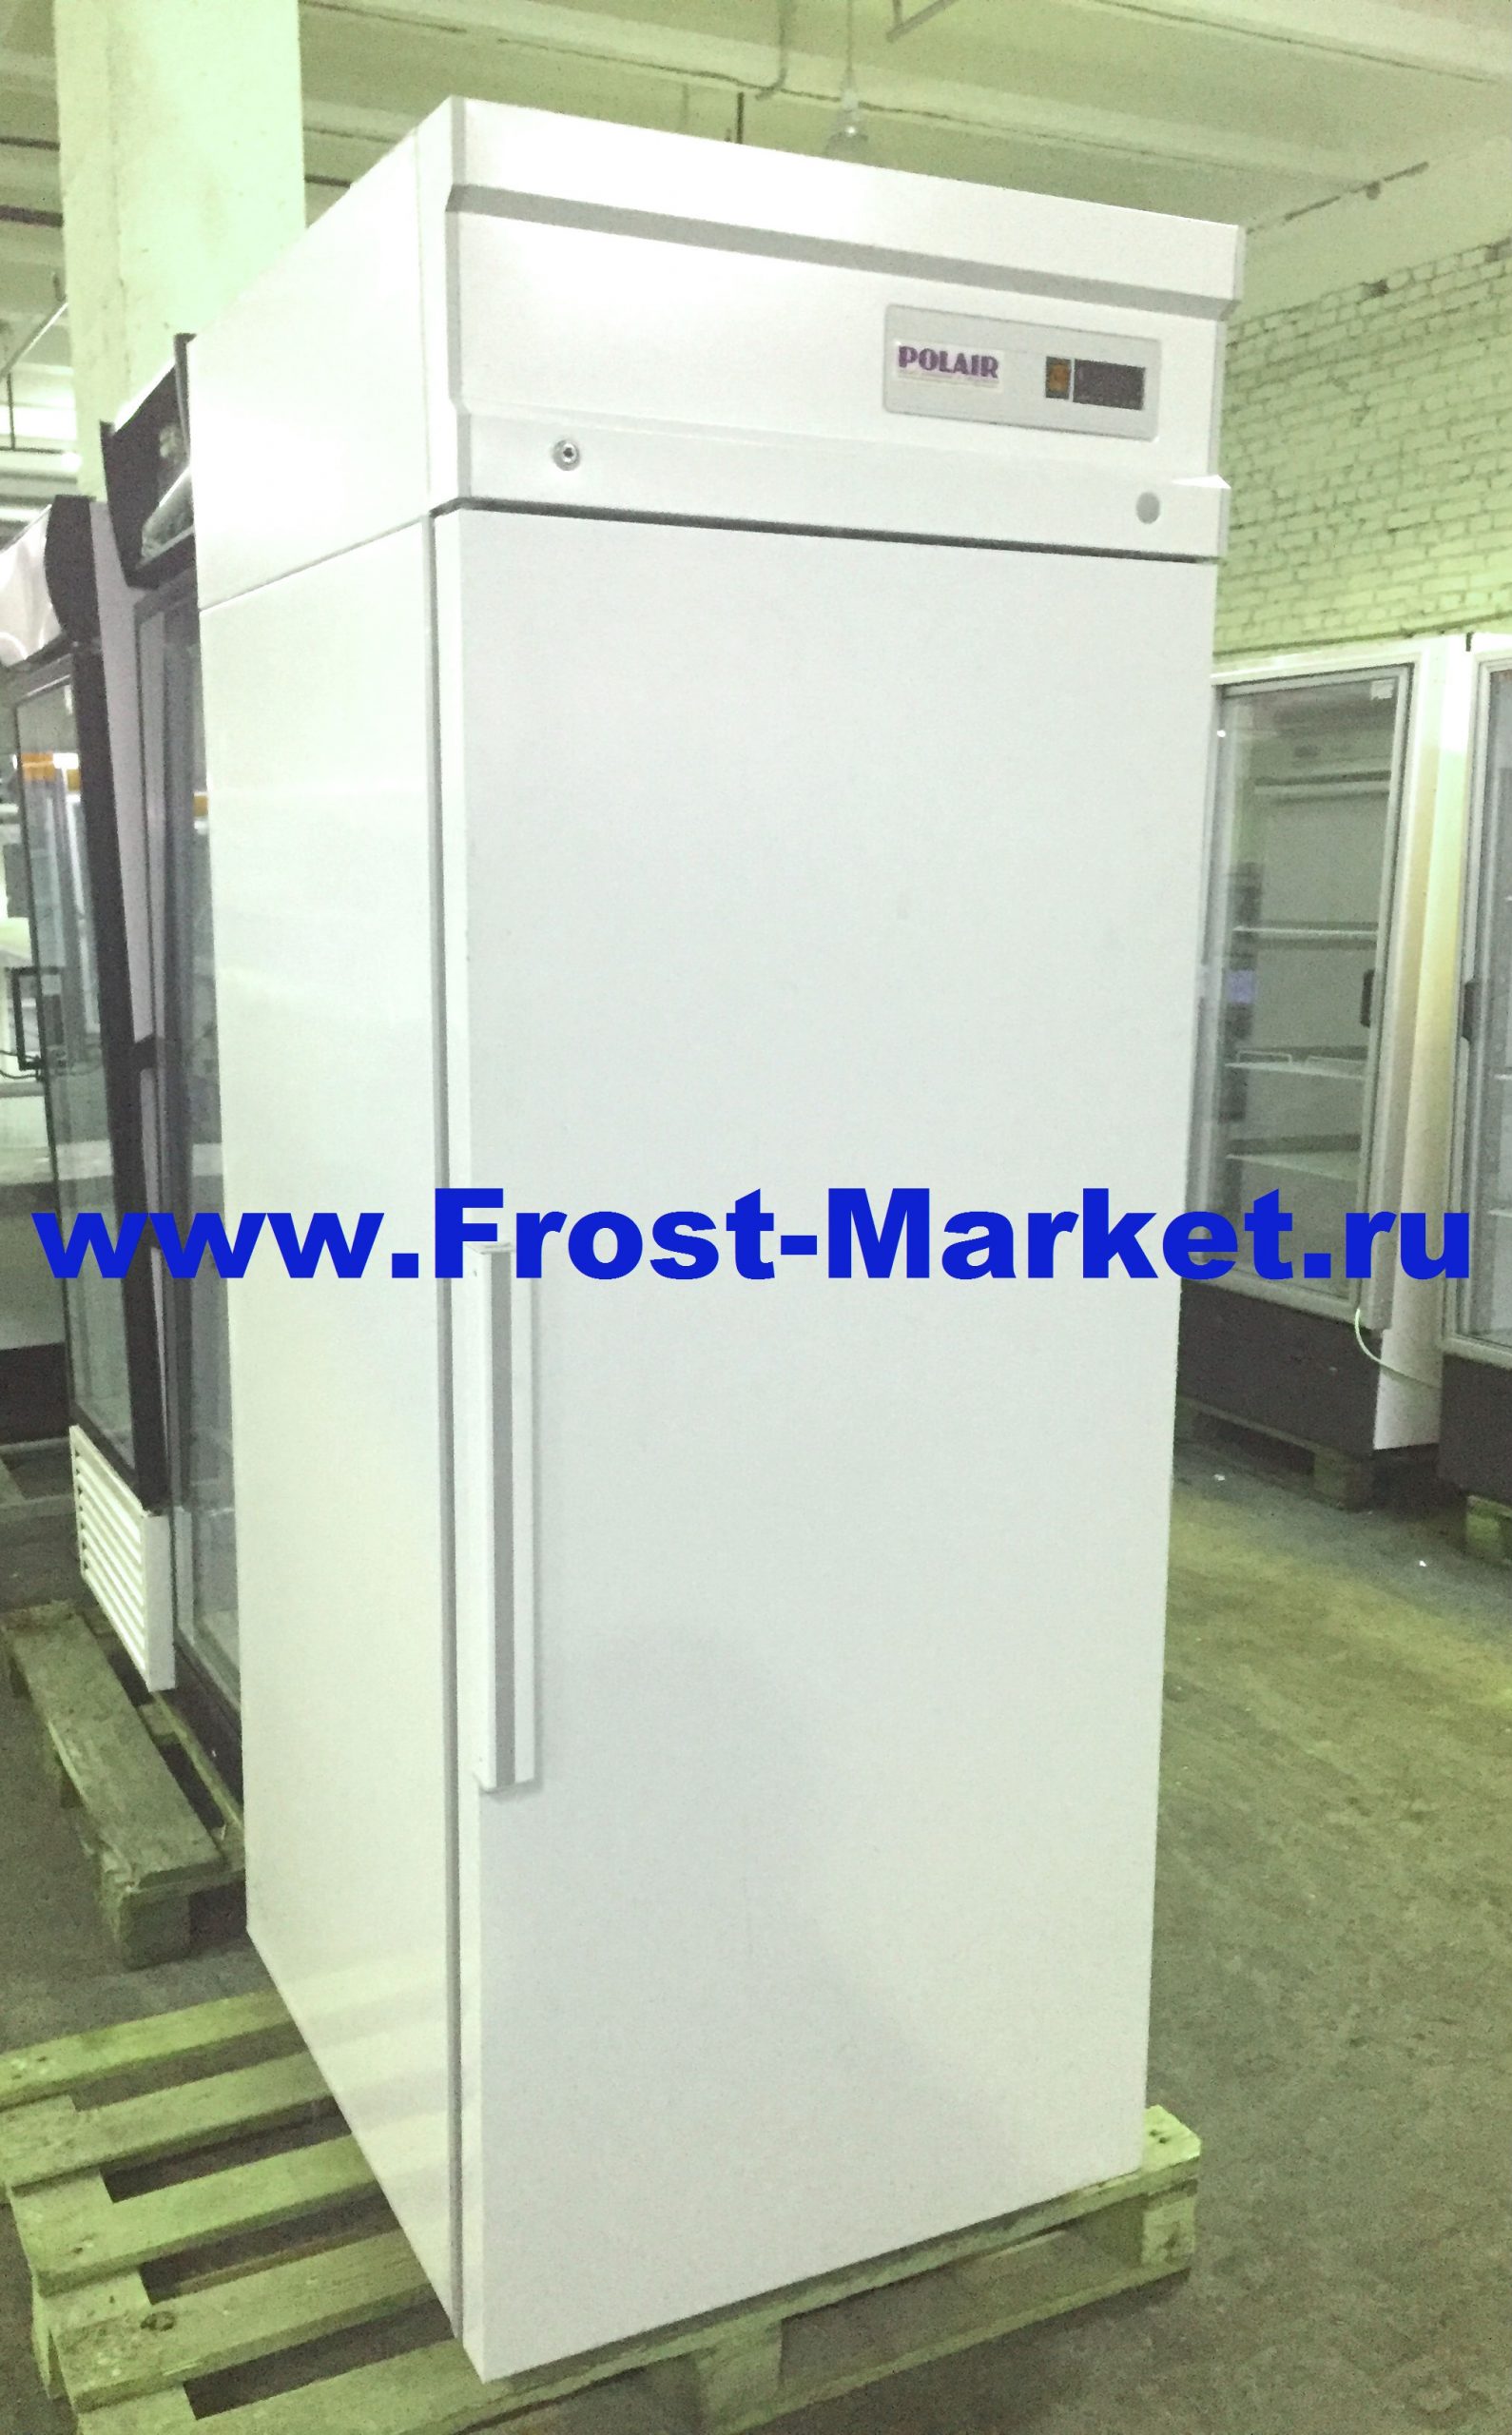 Cb107 s. Холодильник Polair cm107-s. Шкаф холодильный Polair cm107-s. Холодильный шкаф Polair 107-s. Шкаф морозильный Polair 107-s.